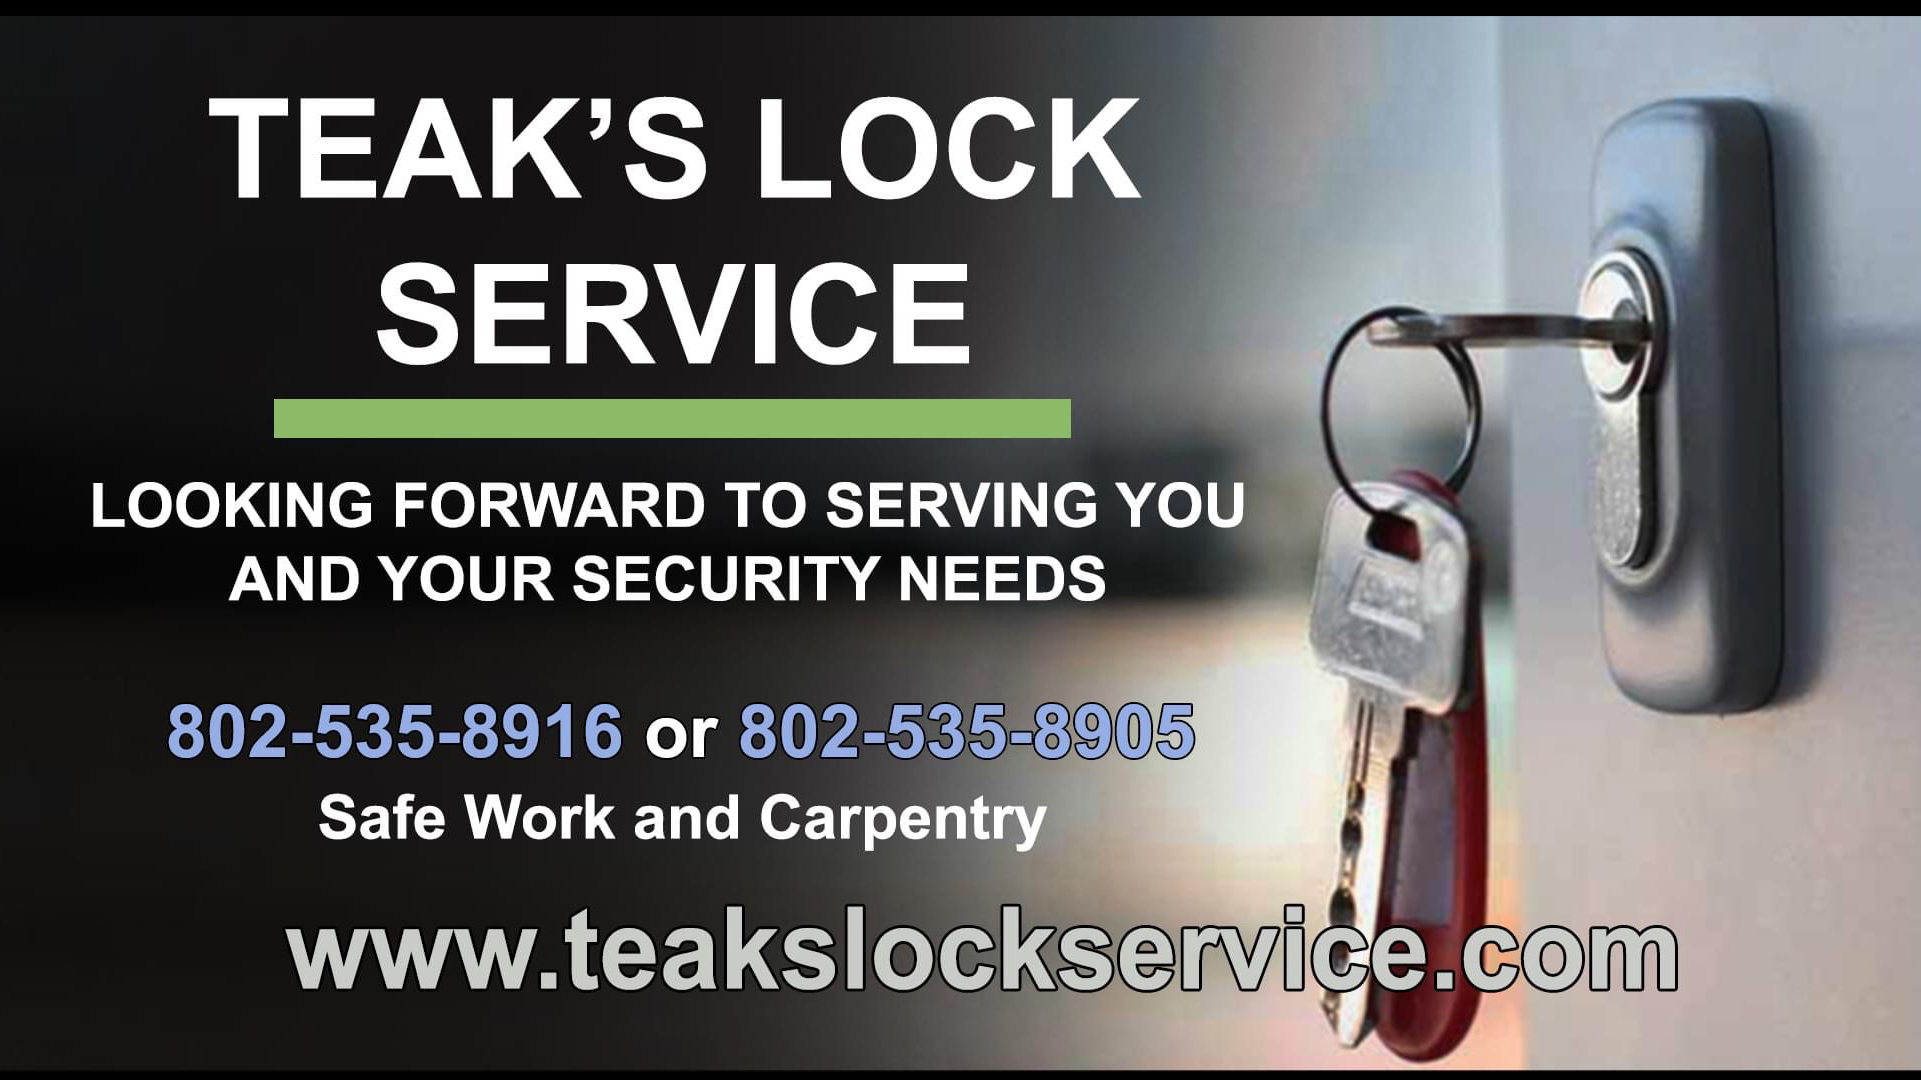 Teak's Lock Service